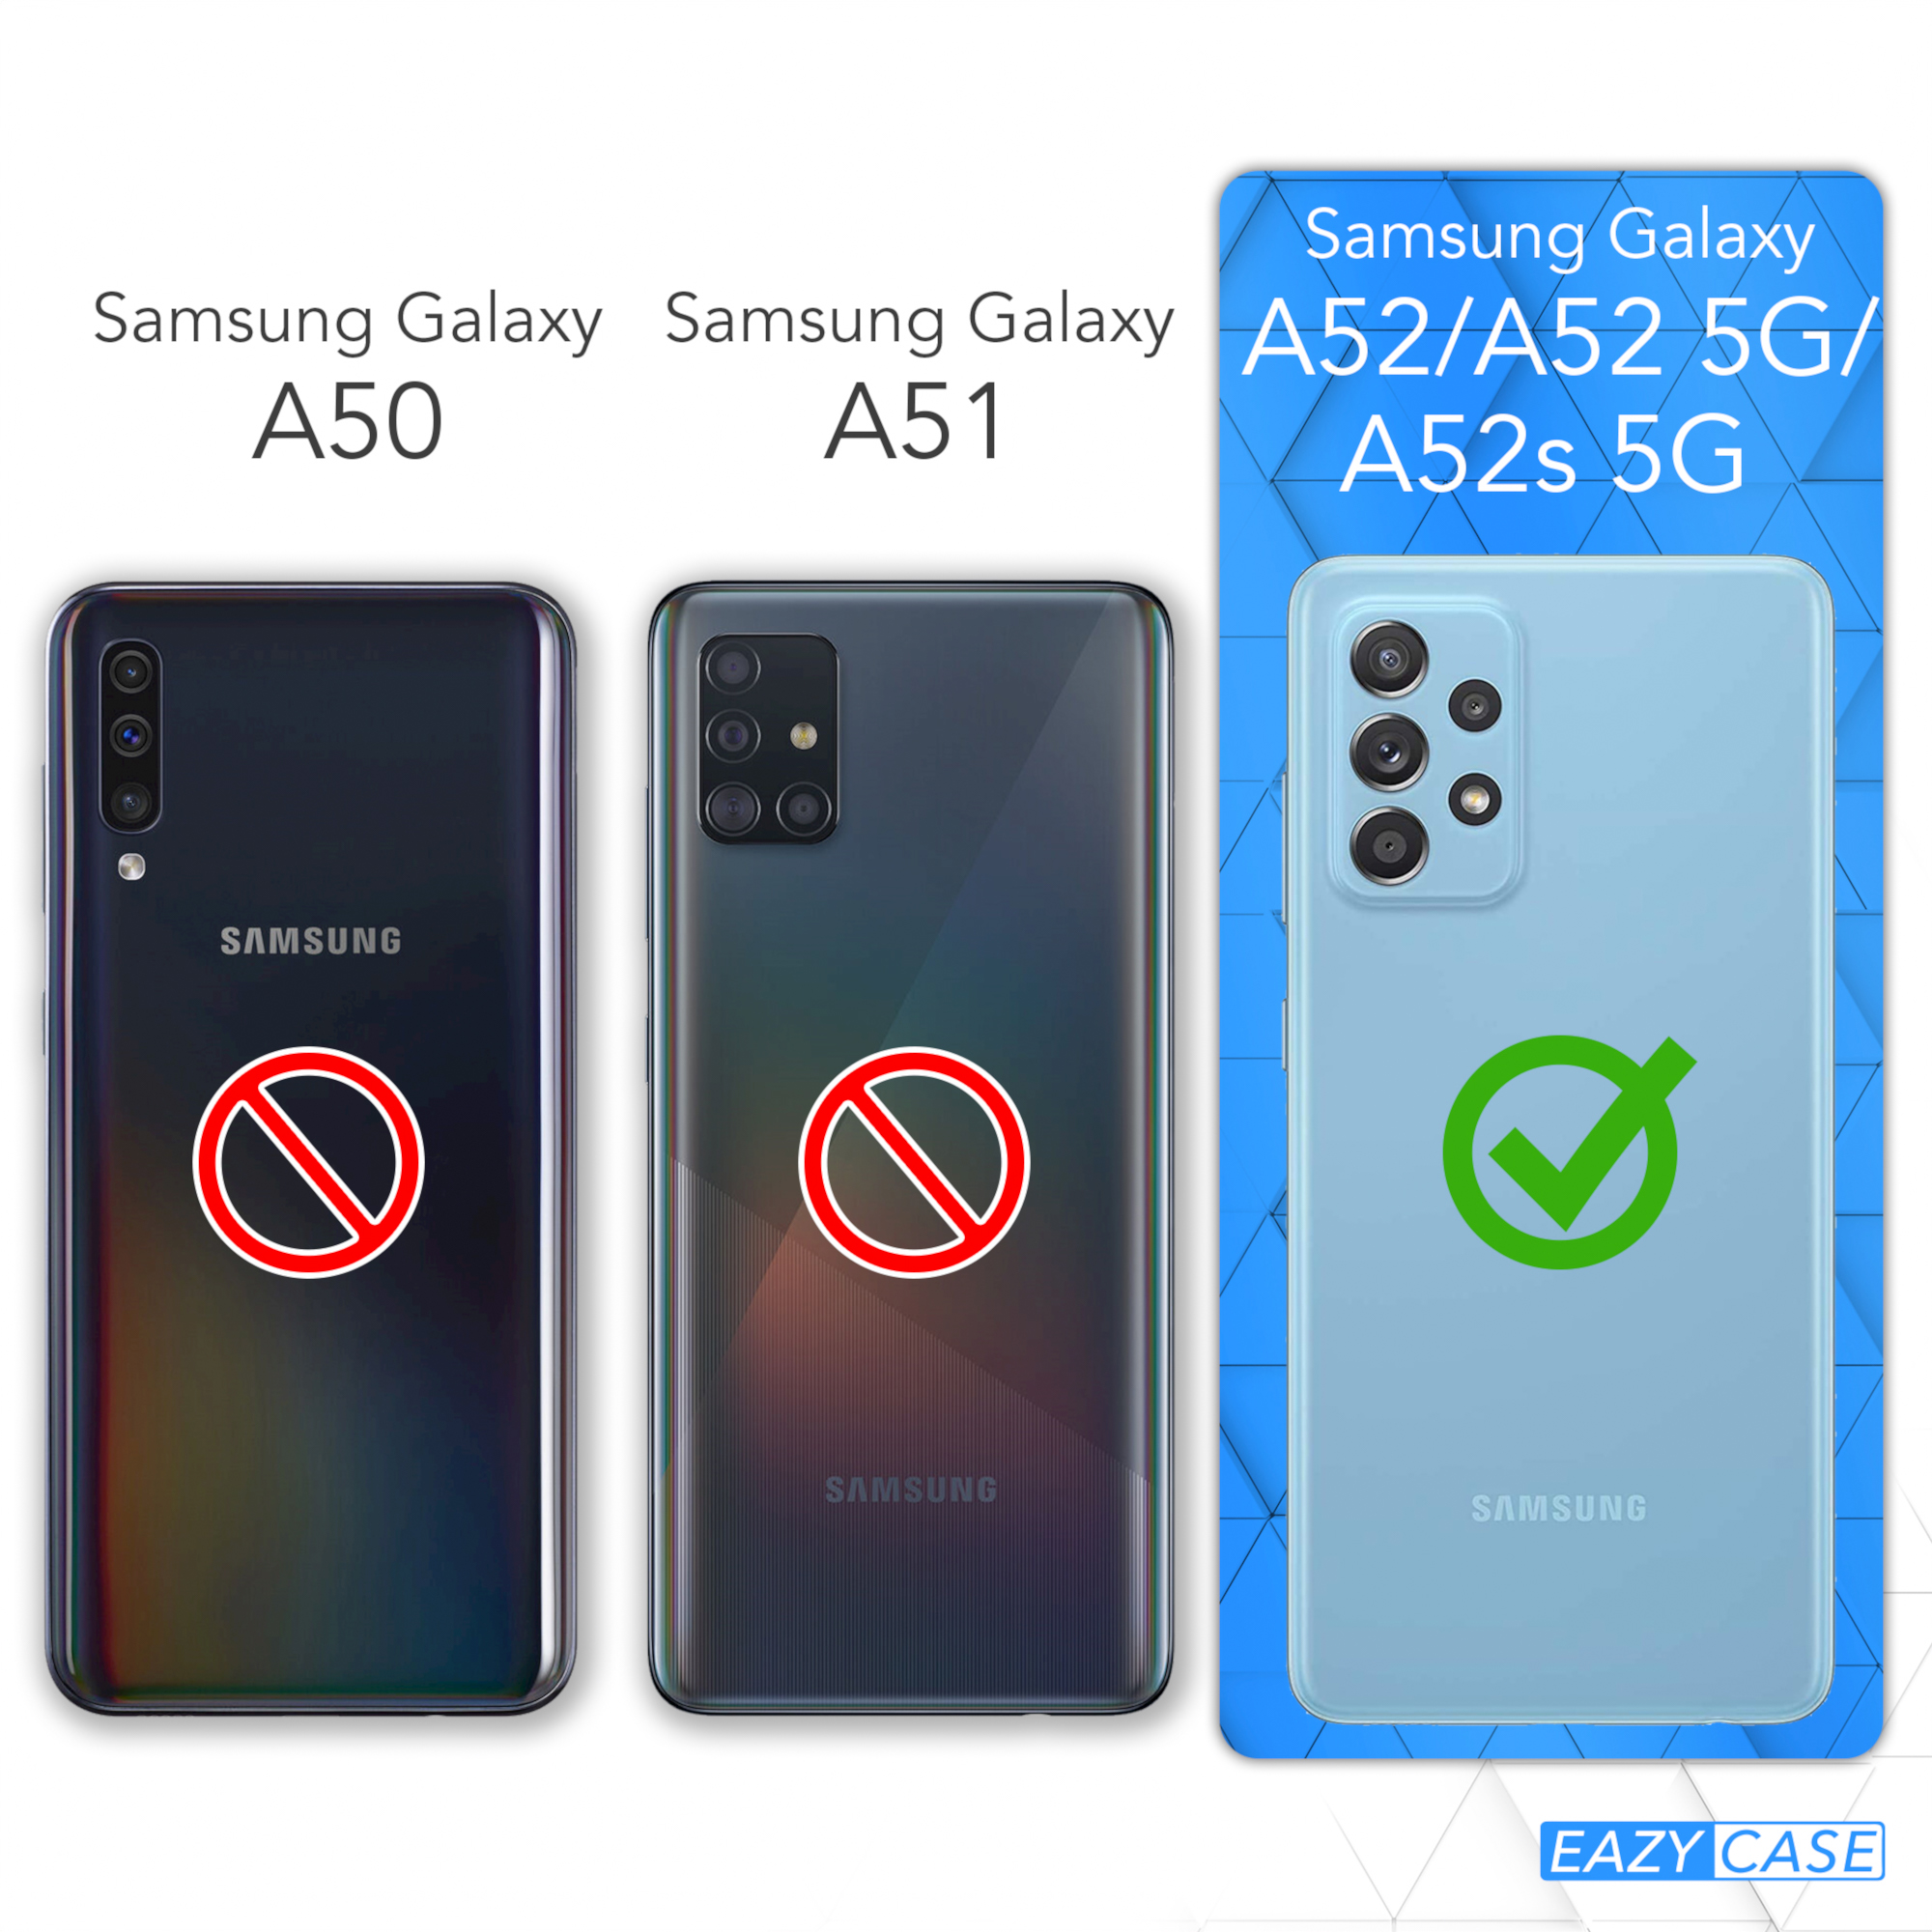 EAZY CASE Transparente A52s / A52 mit 5G, unifarbend, / / A52 5G Samsung, Handyhülle Umhängetasche, Coral Kette Altrosa Galaxy runder